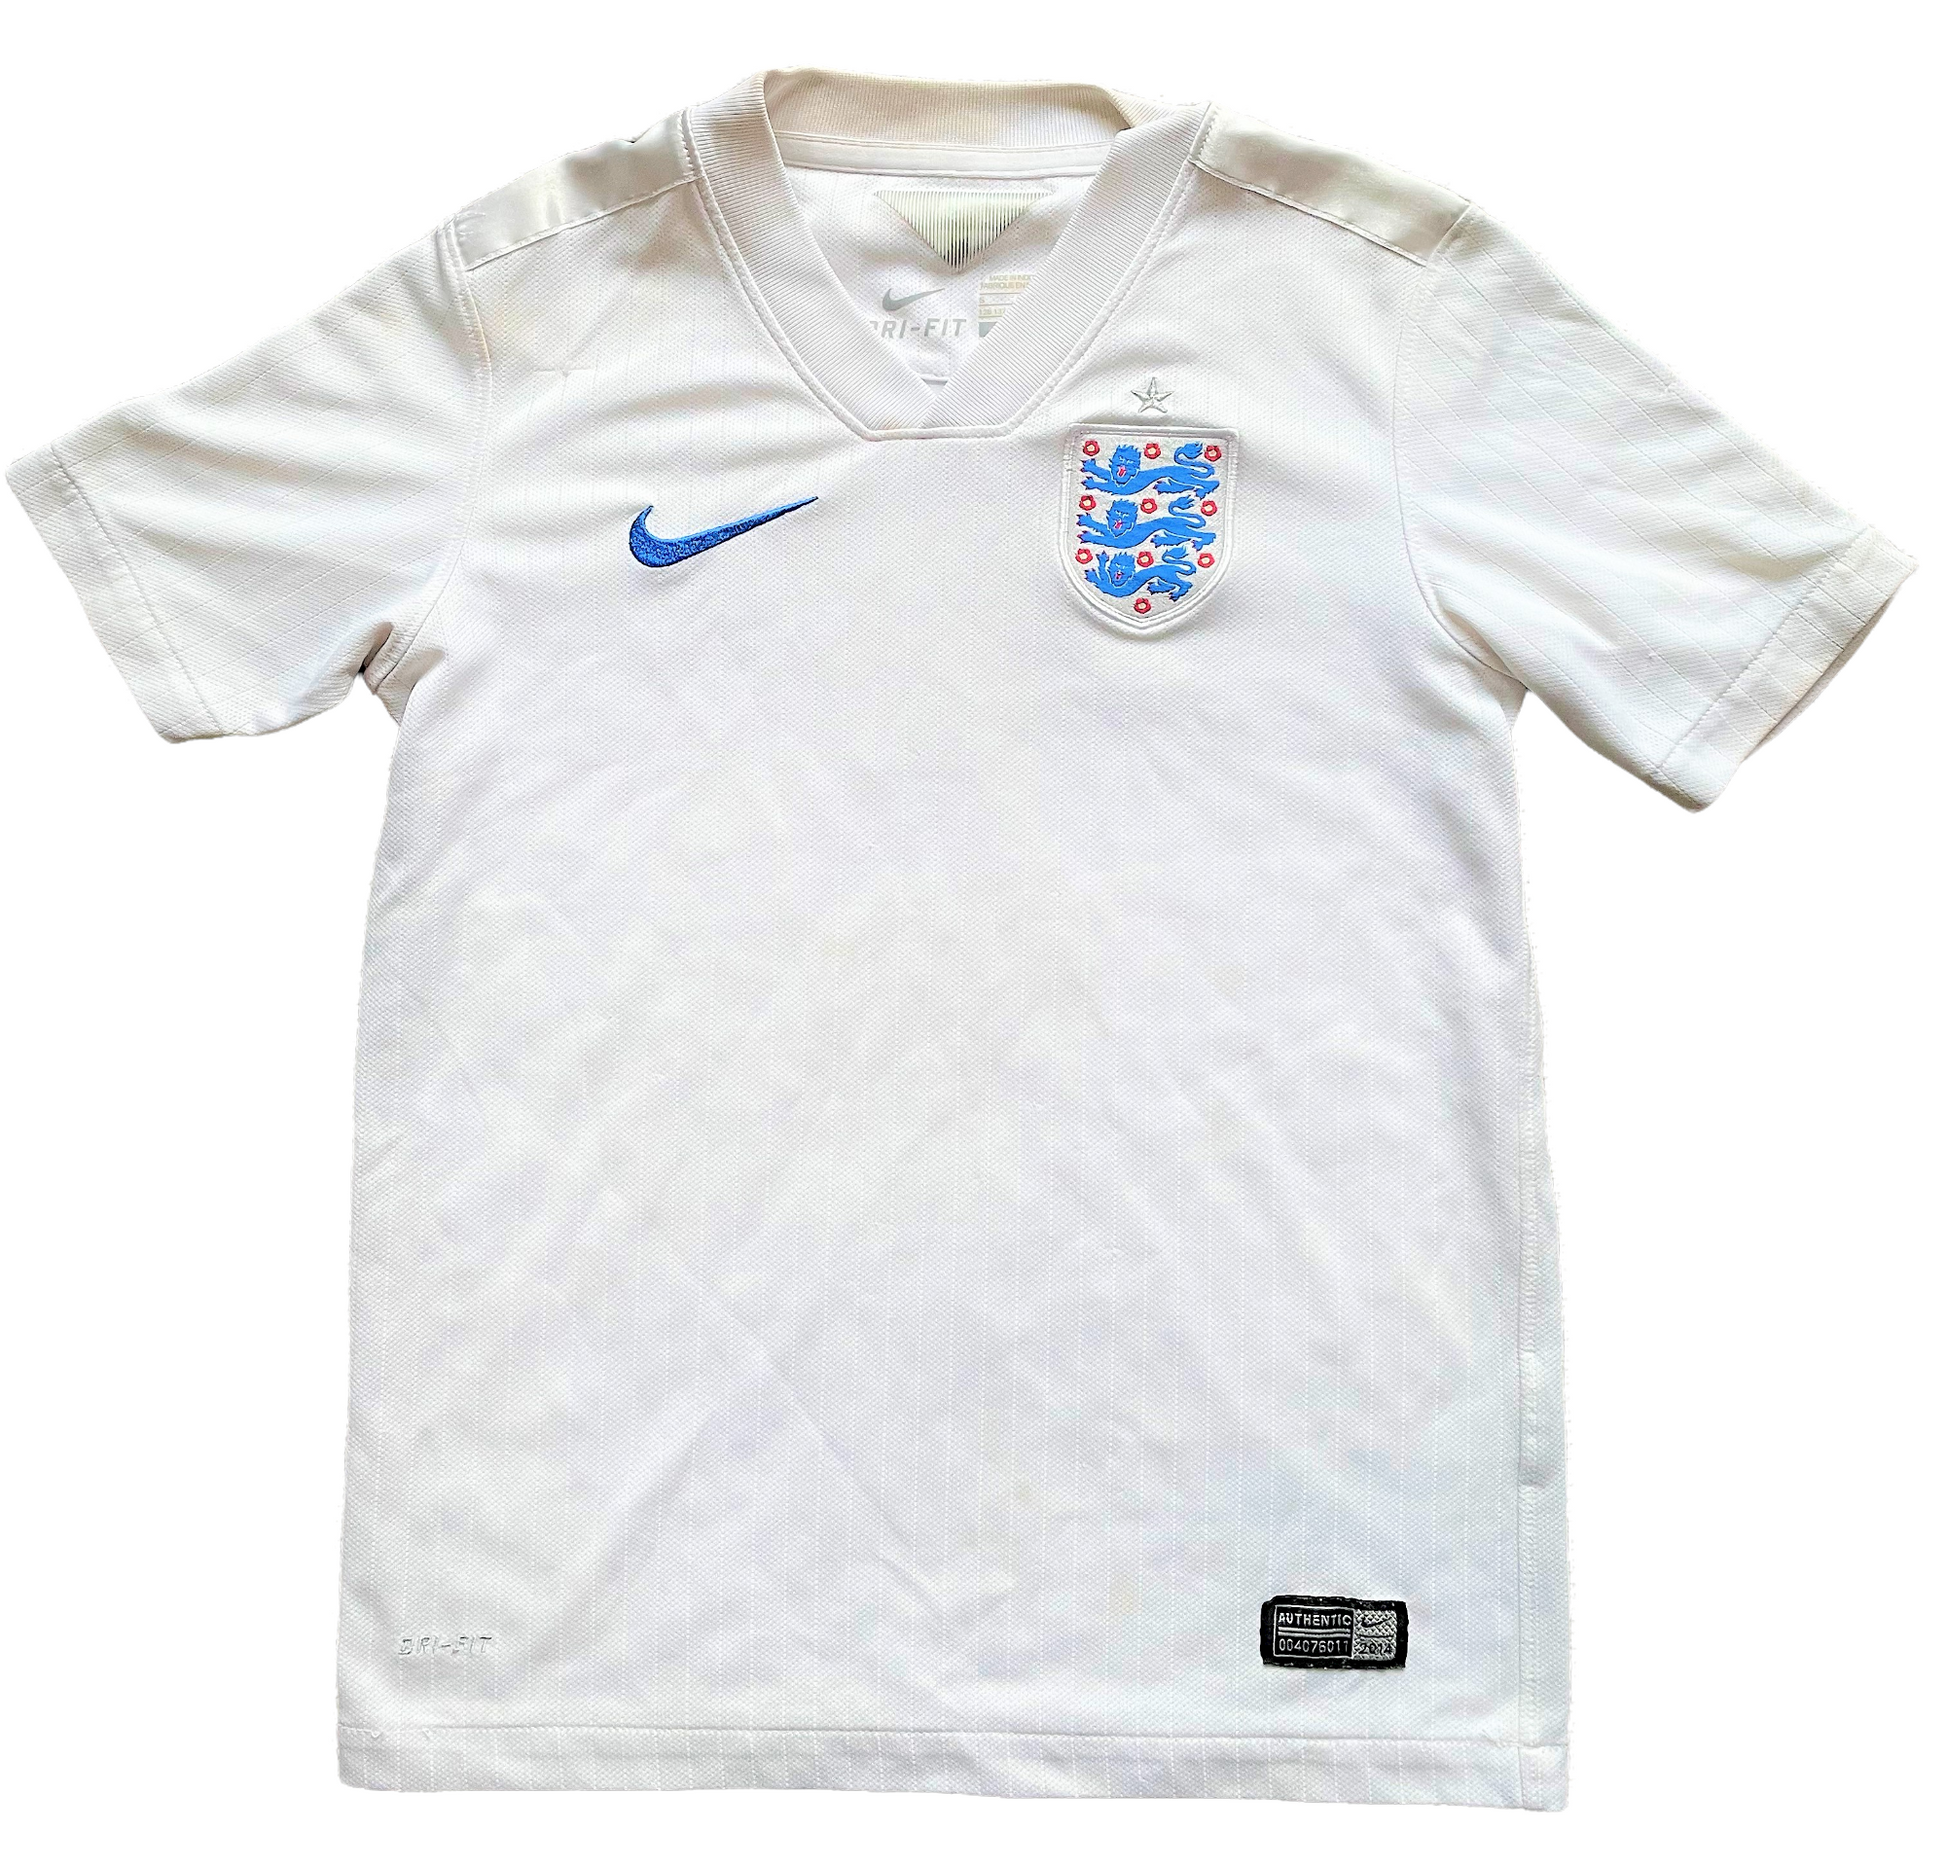 2014-15 England Home Shirt (poor) Medium Boys 8 to 10 years